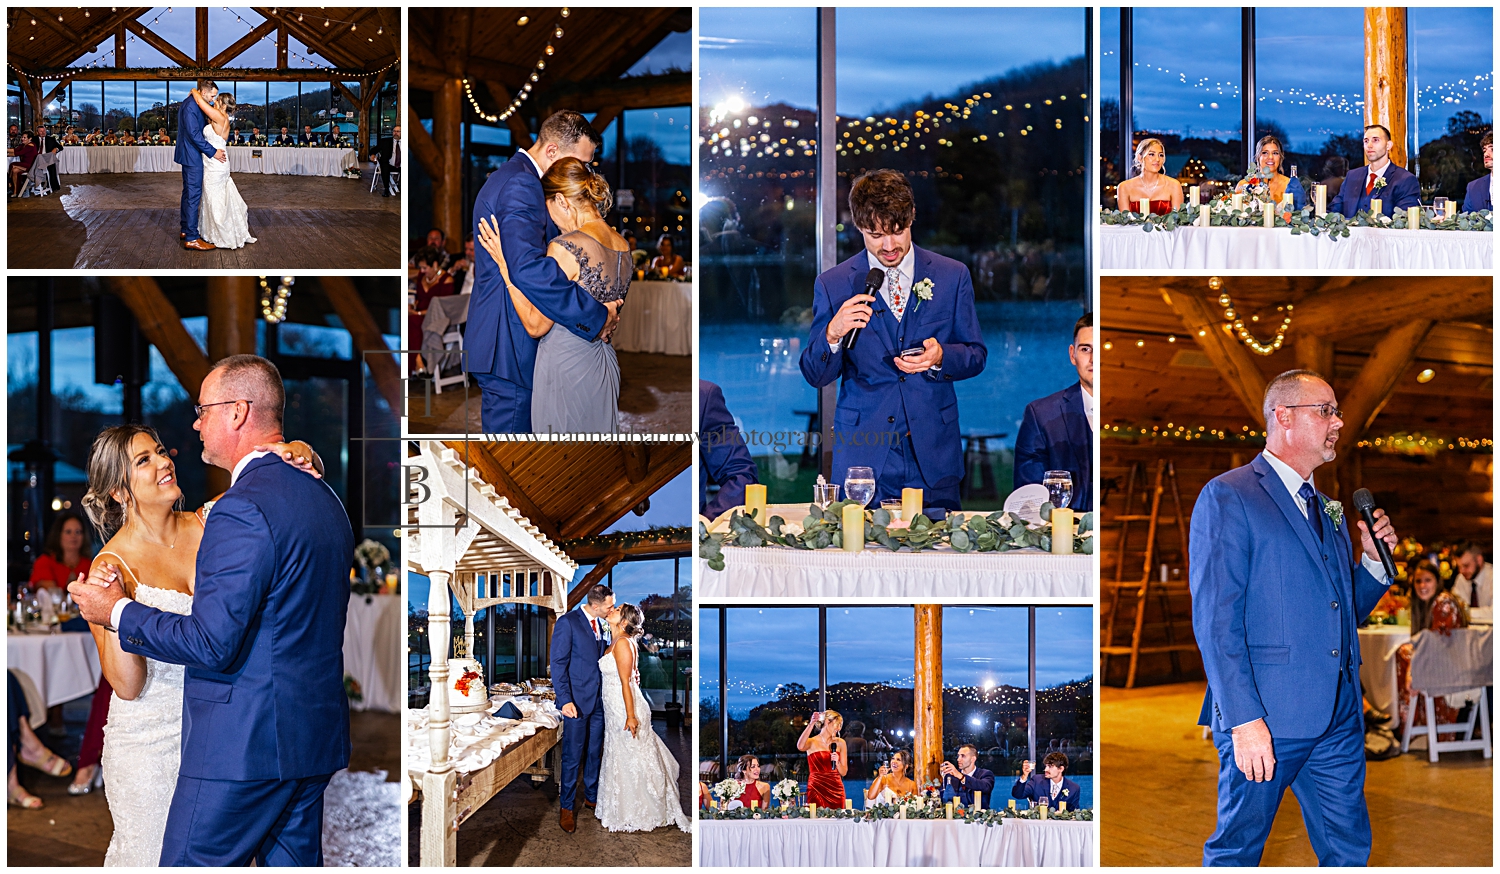 wedding reception overlooks a lake through windows at dusk